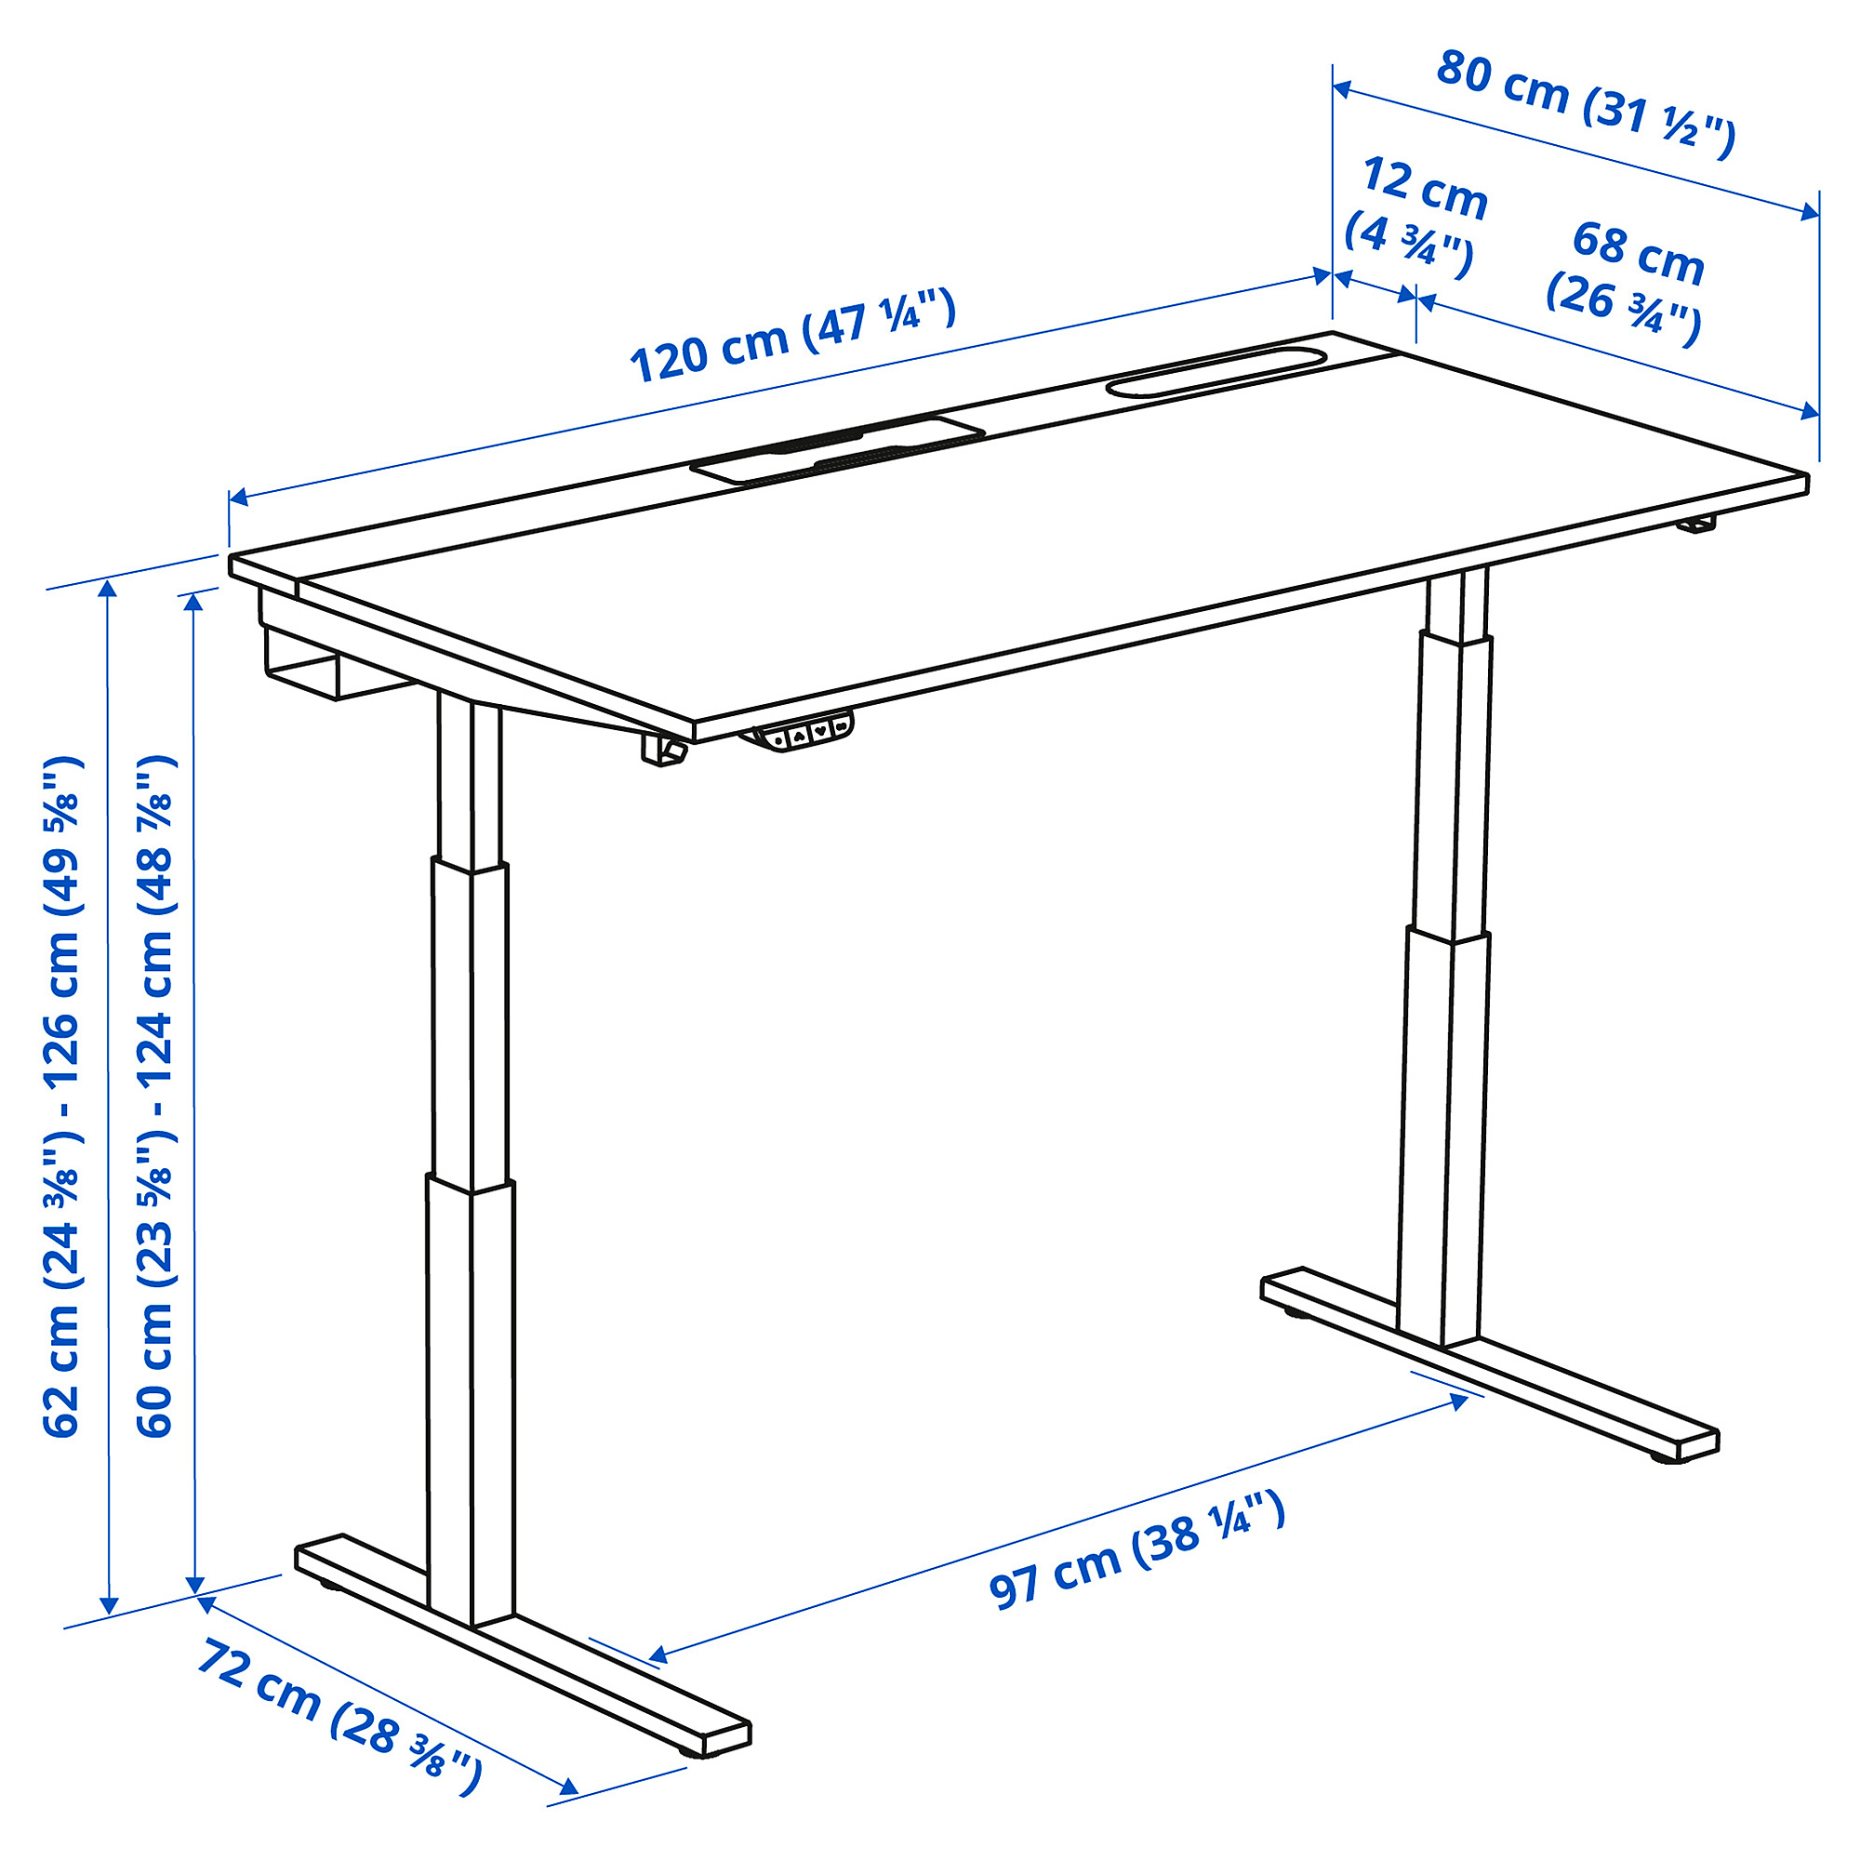 MITTZON, desk sit/stand/electric, 120x80 cm, 995.277.72